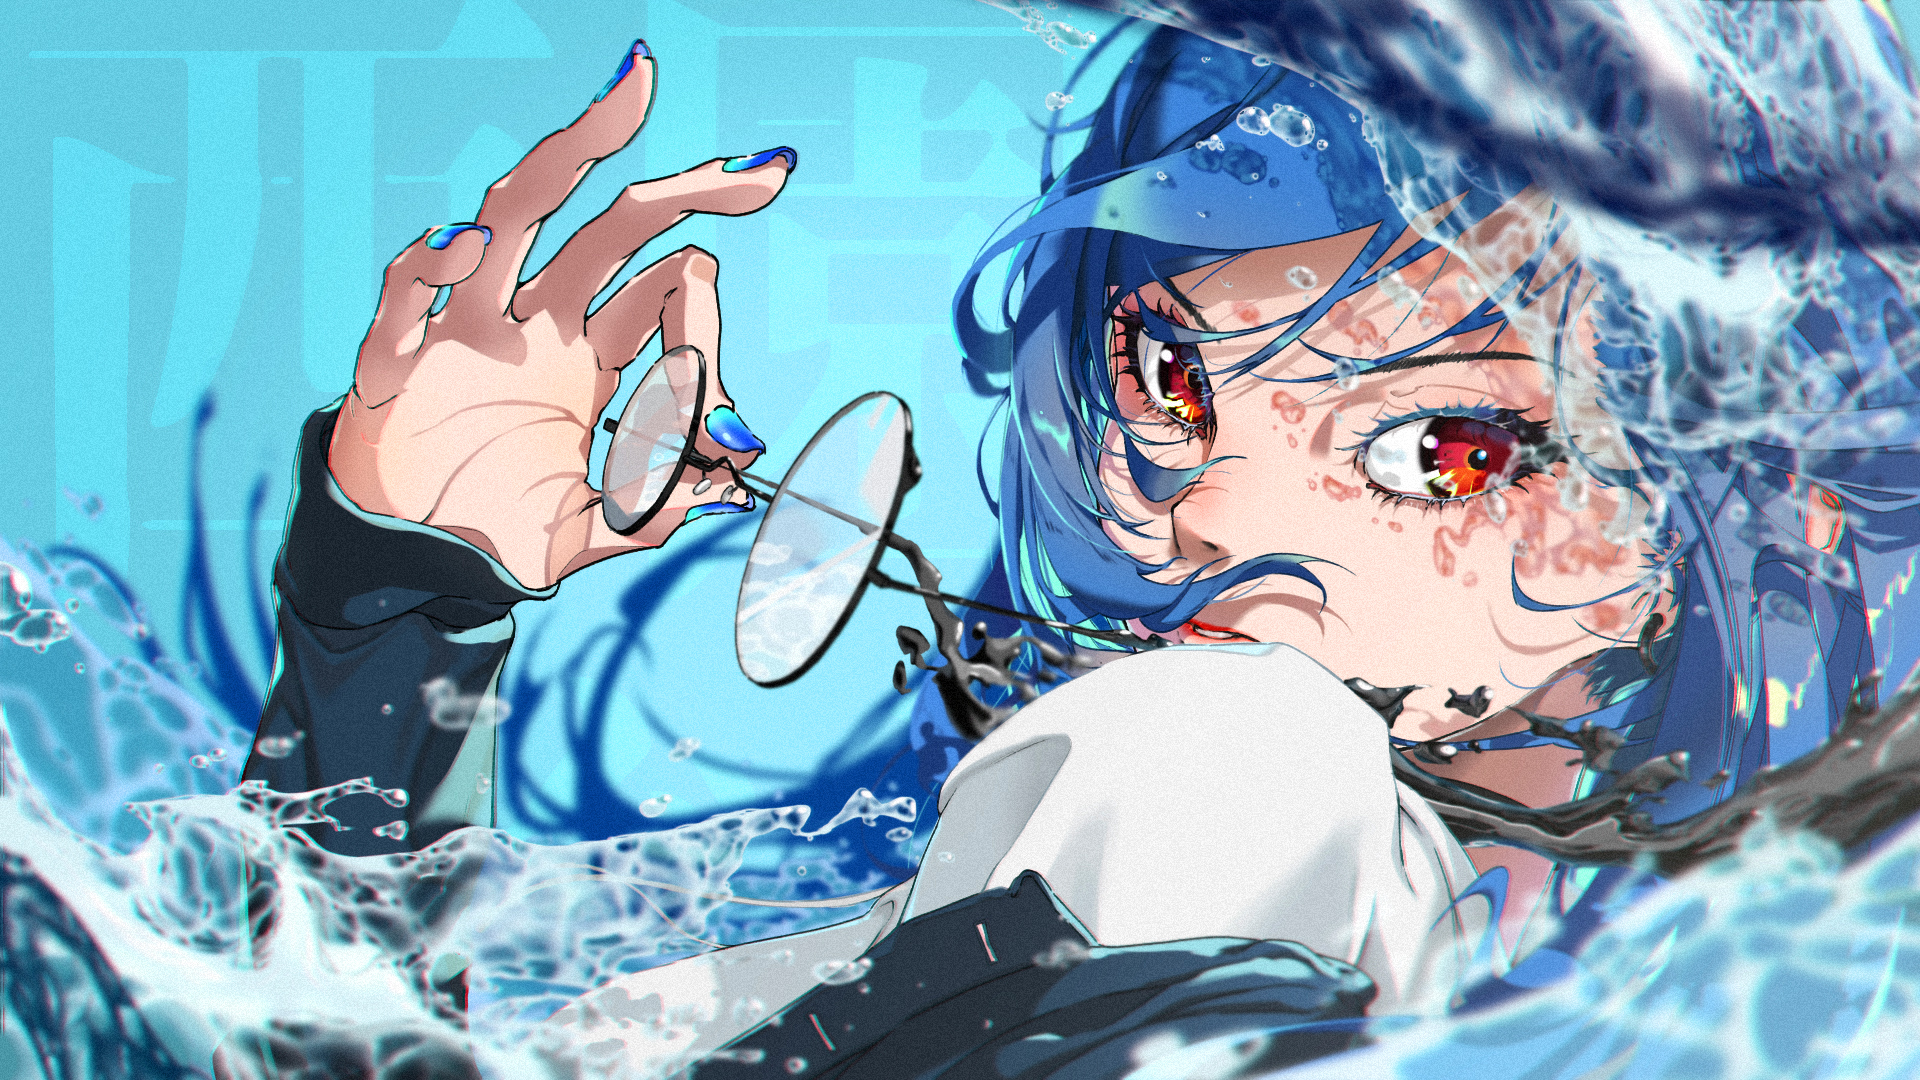 Anime Water Splash Sound 5  Soundeffects Wiki  Fandom